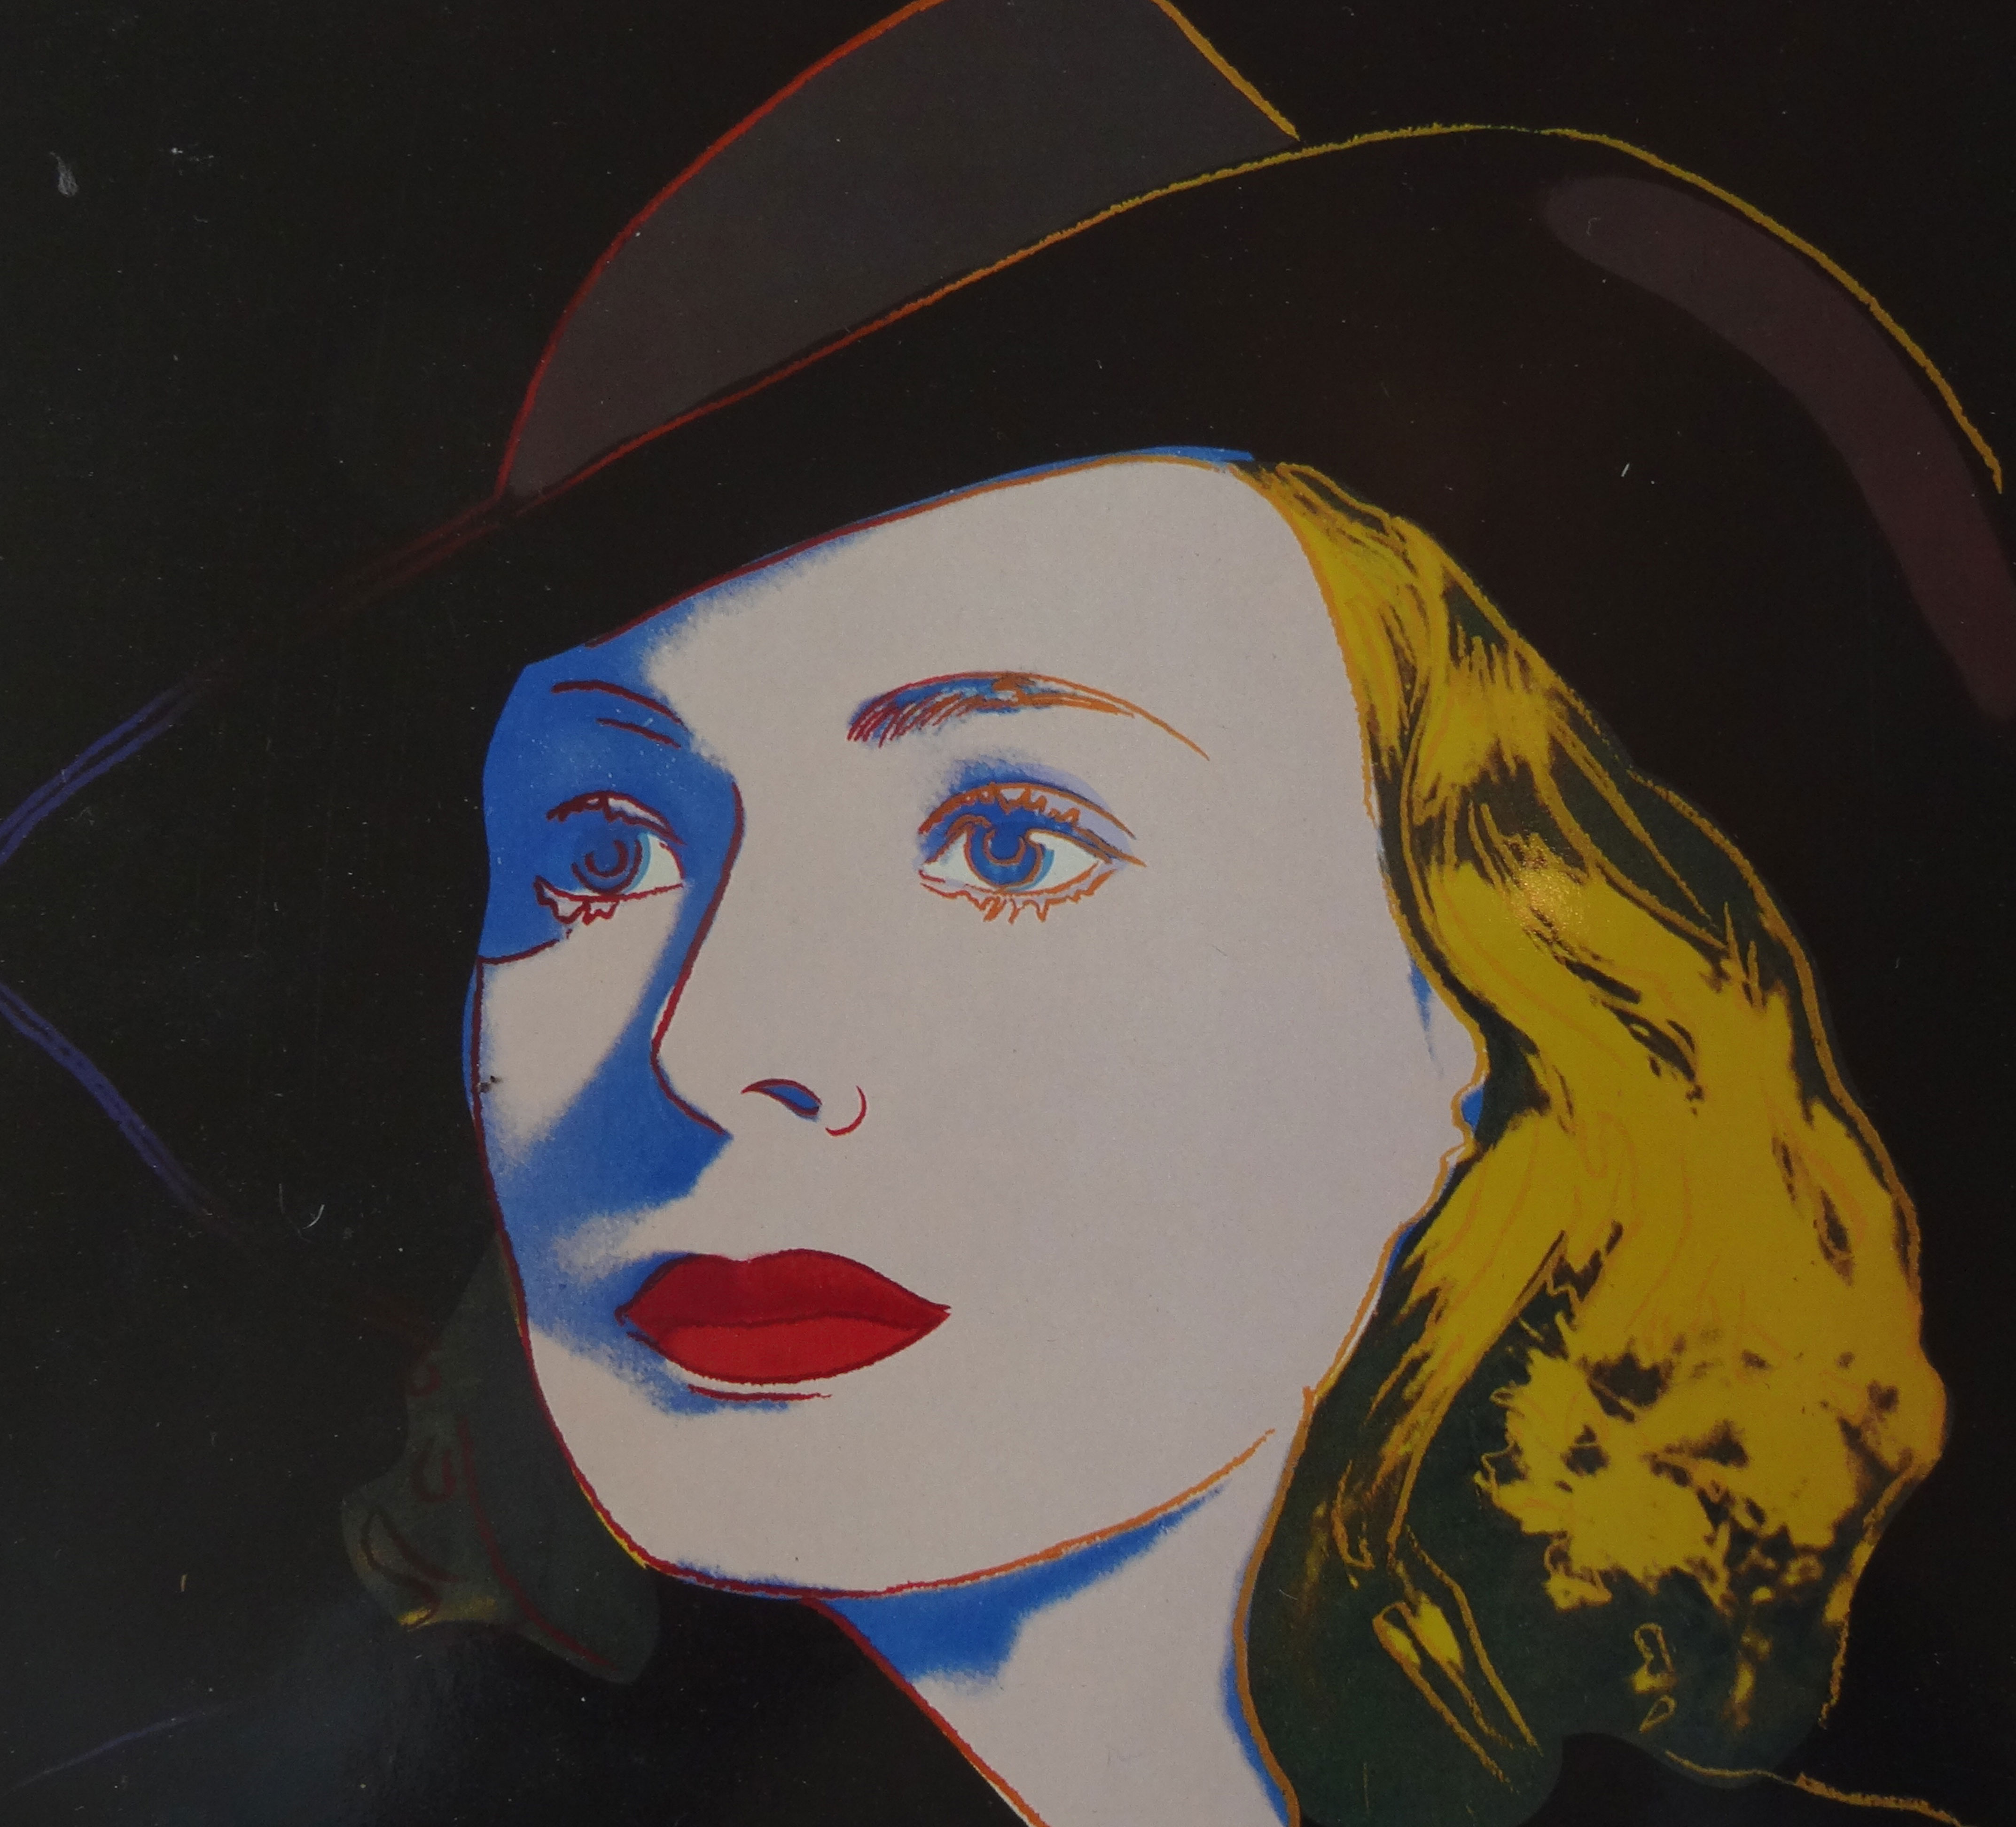 Portret van Ingrid Bergman uit Casablanca nr. 3